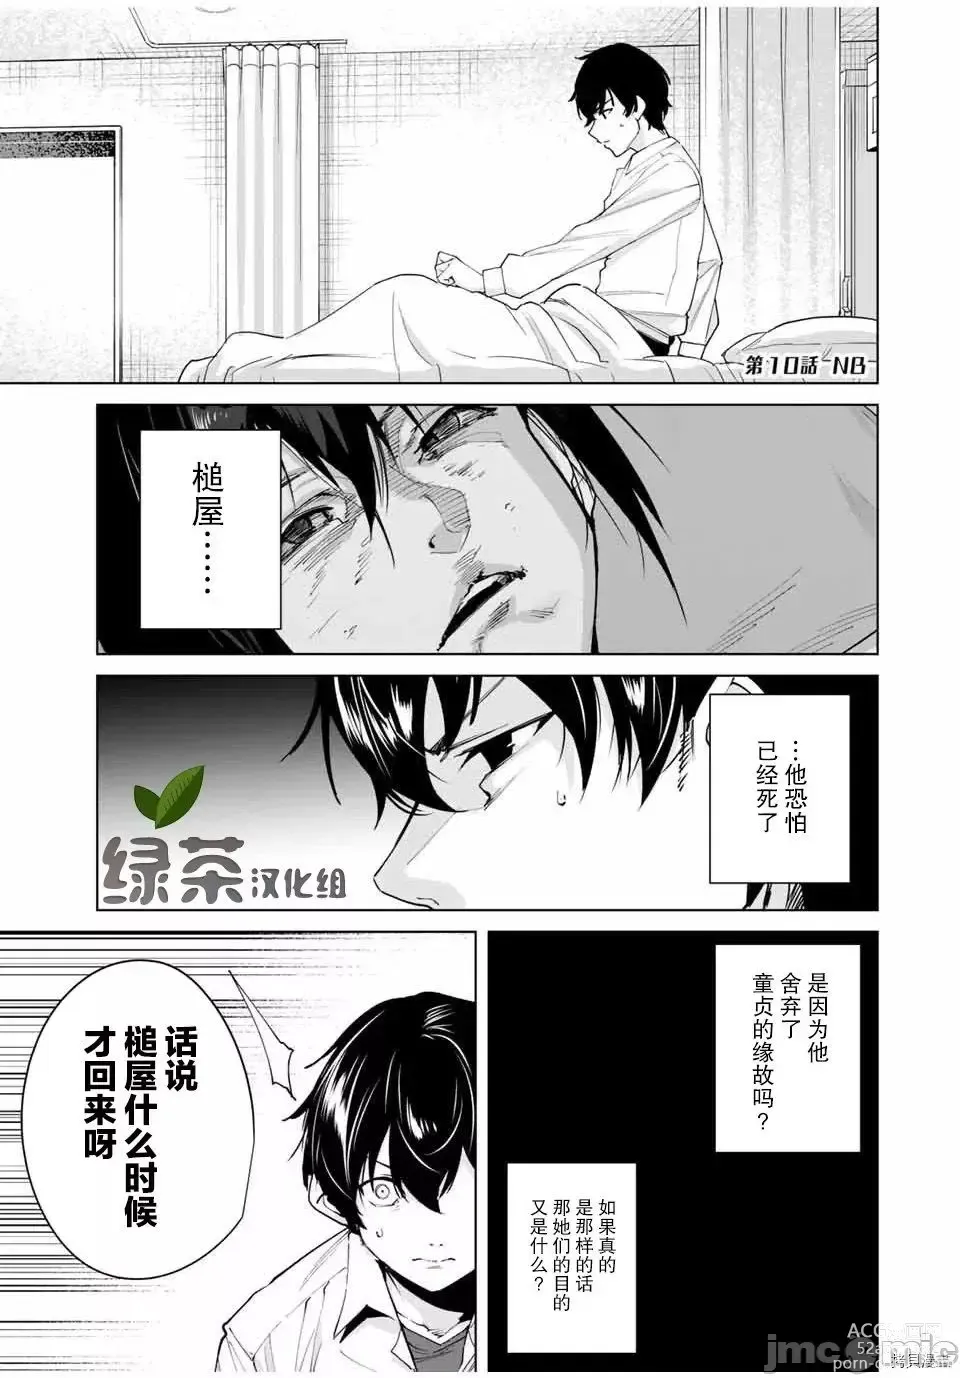 Page 172 of manga 命運戀人 Destiny Lovers 【汉化版】1